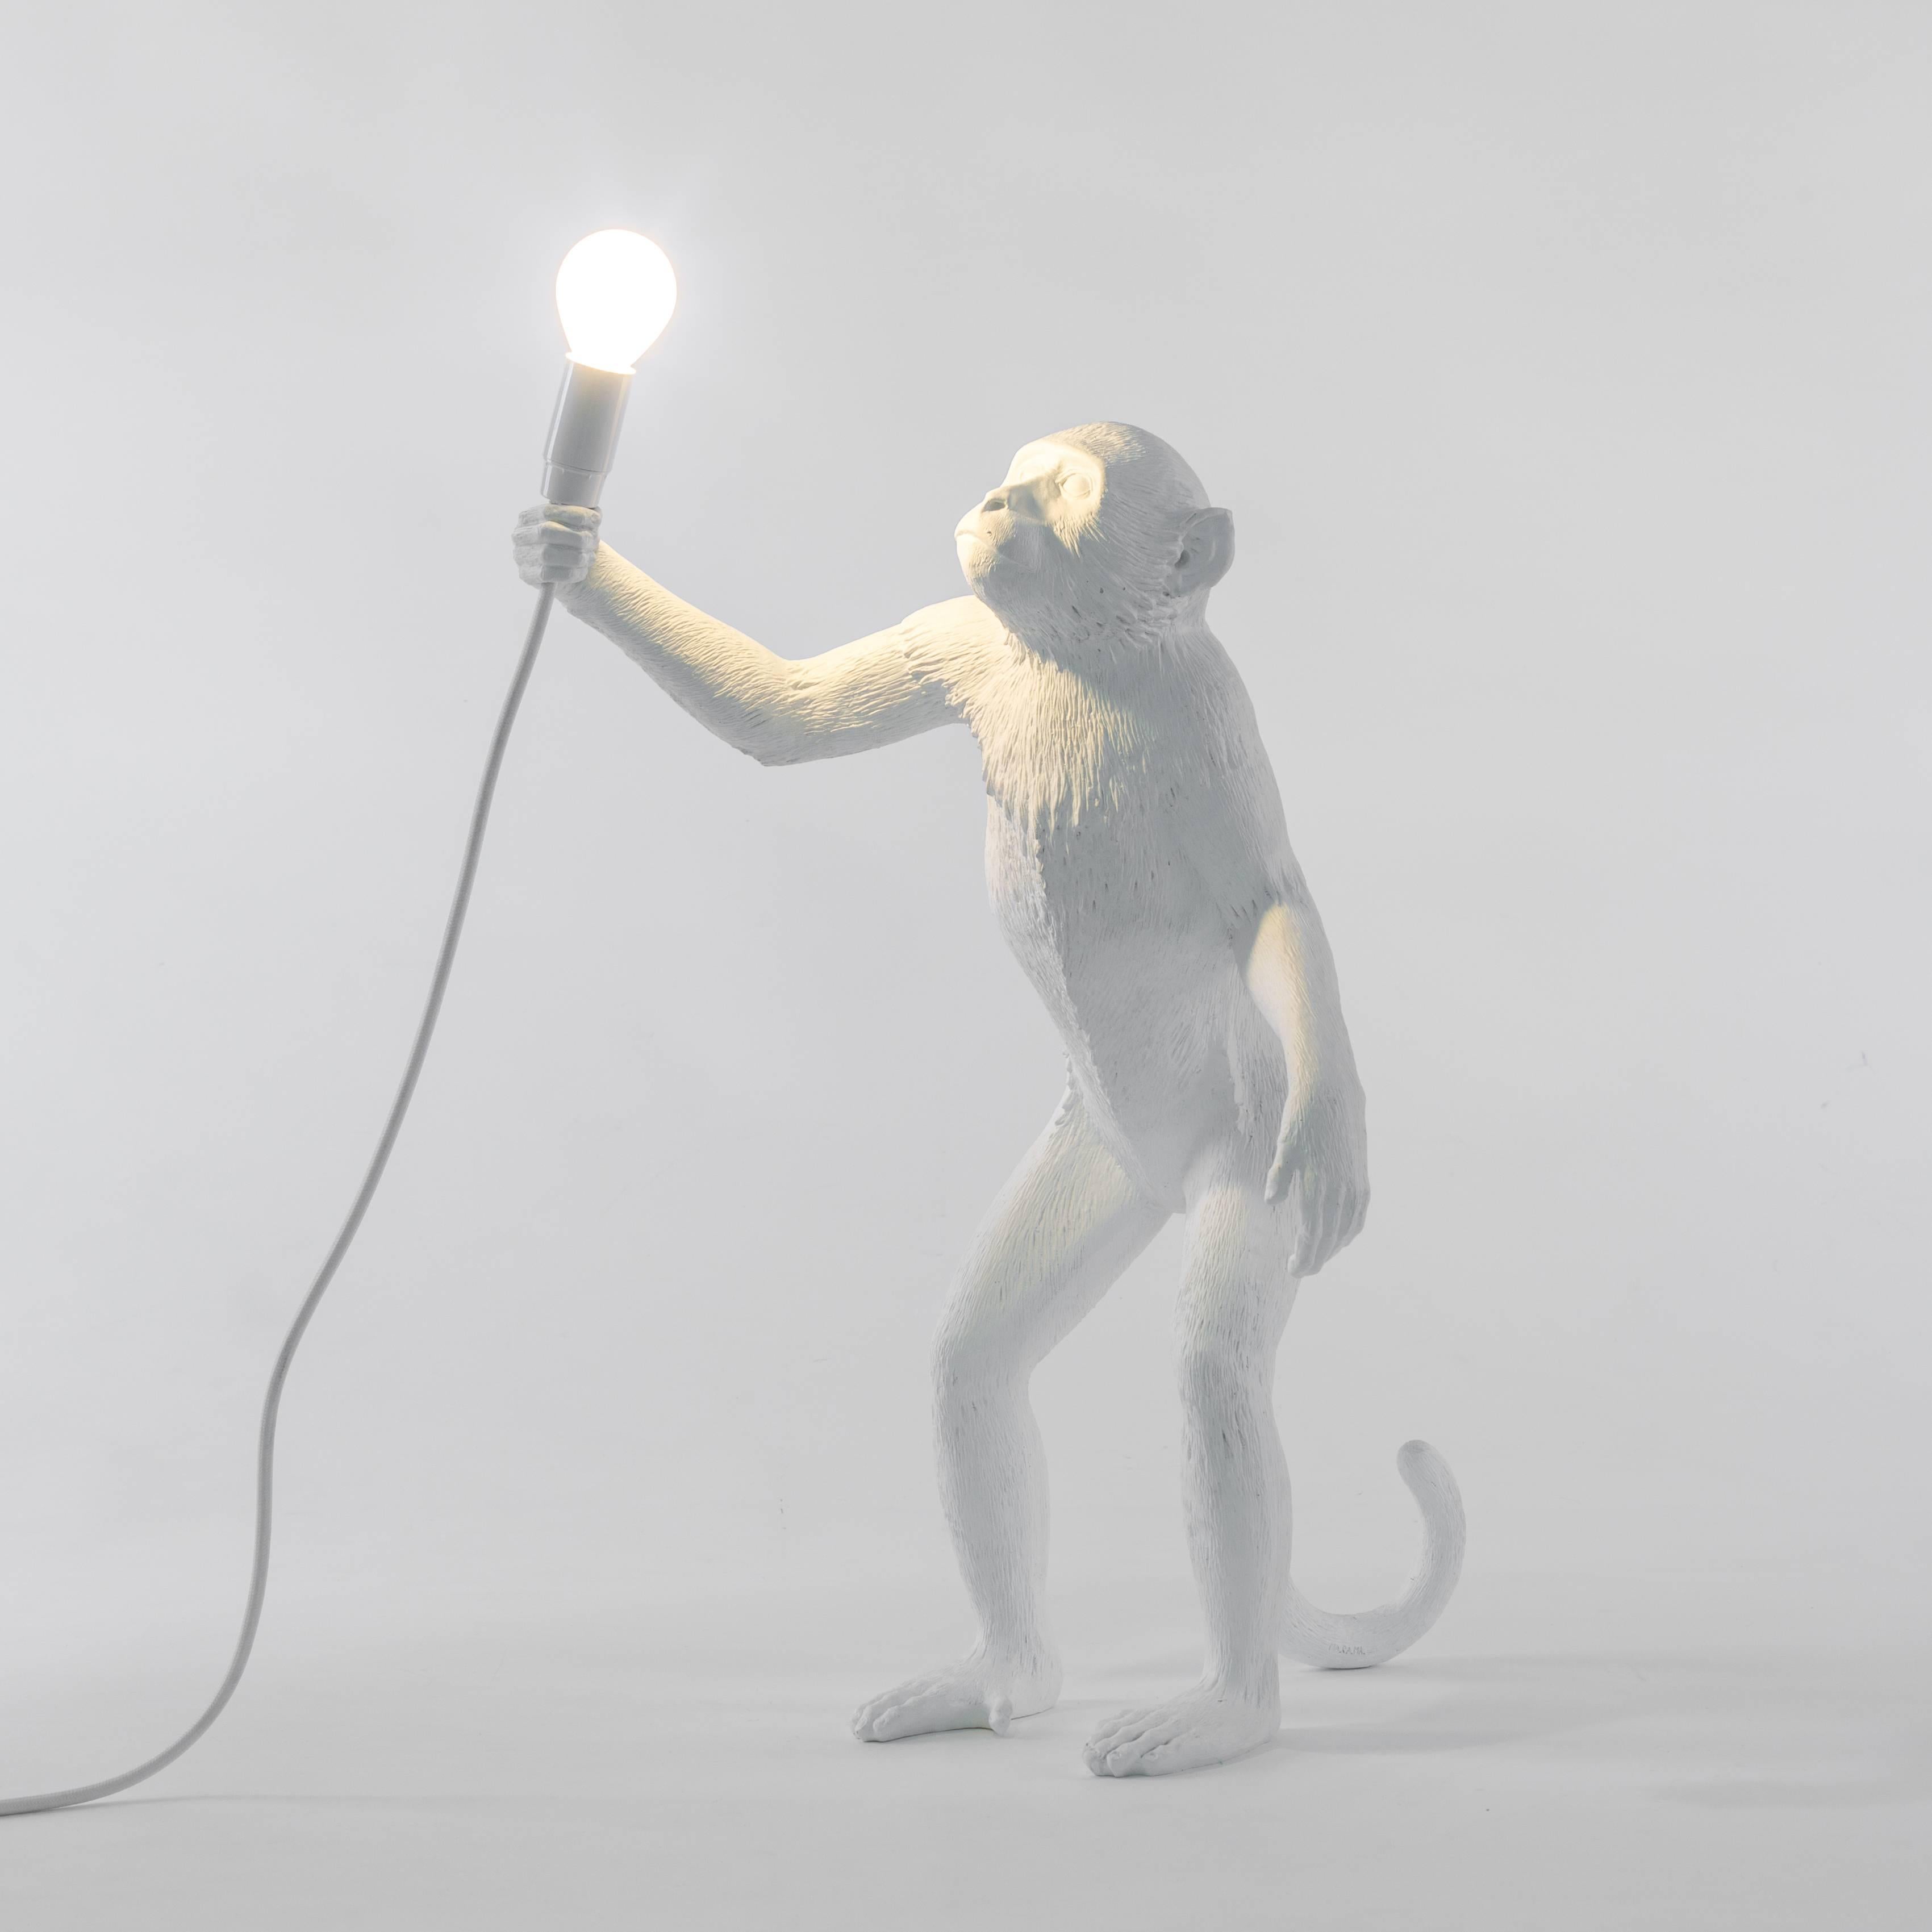 homegoods monkey lamp